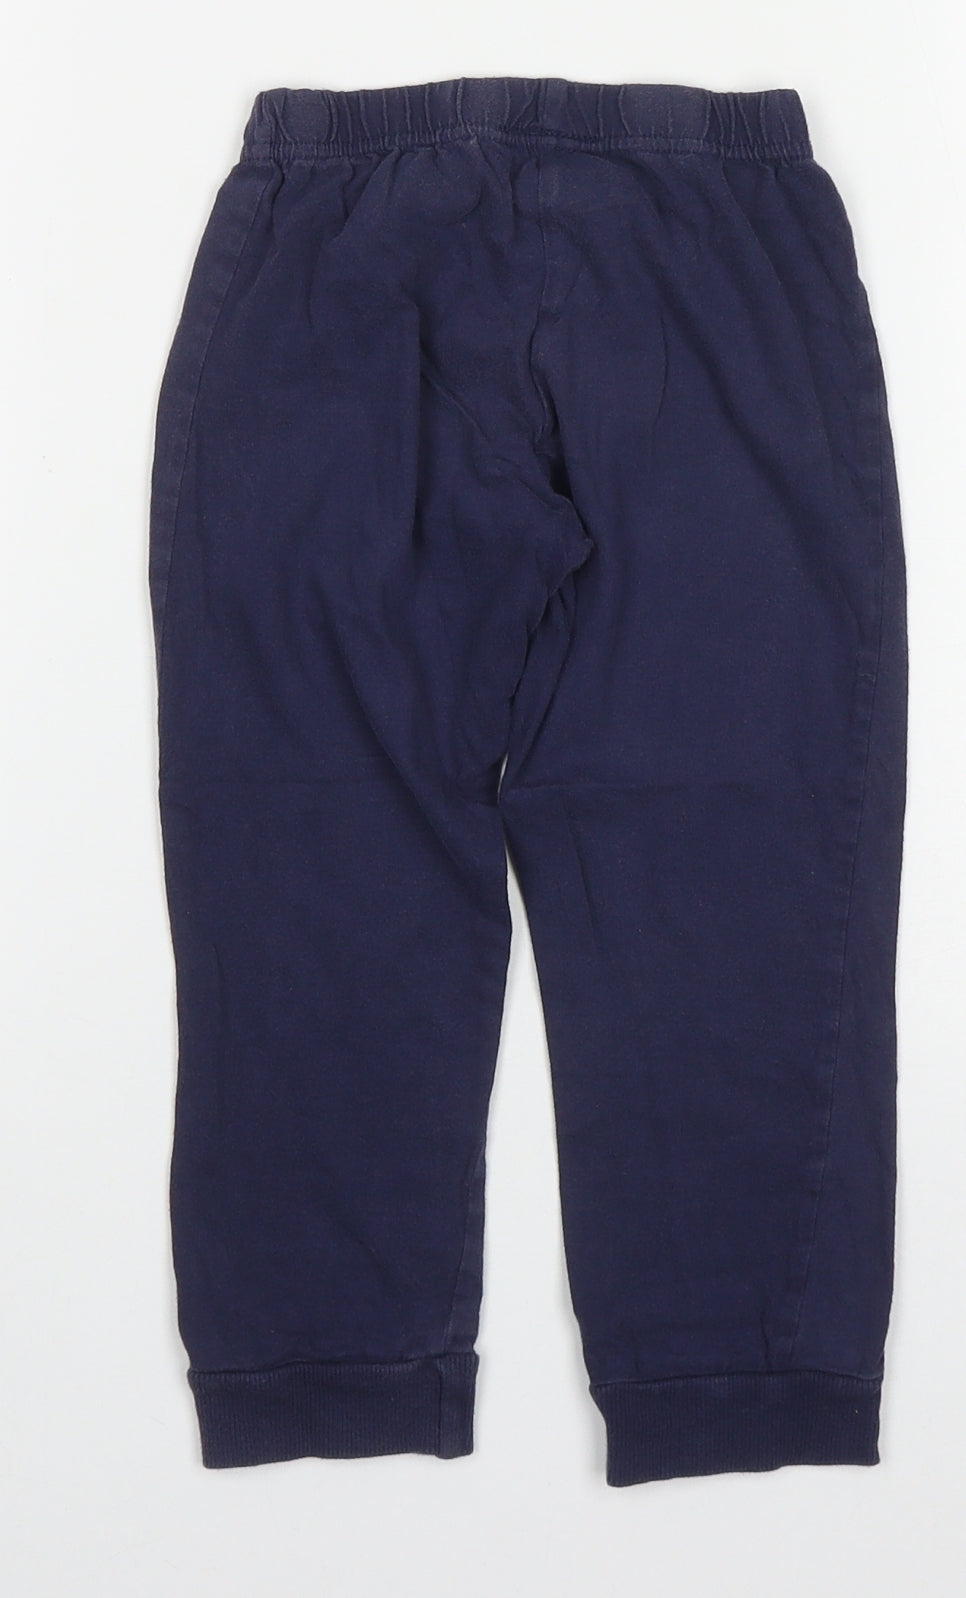 Tesco Boys Blue  Cotton Sweatpants Trousers Size 4-5 Years  Regular  - Pyjama Pants